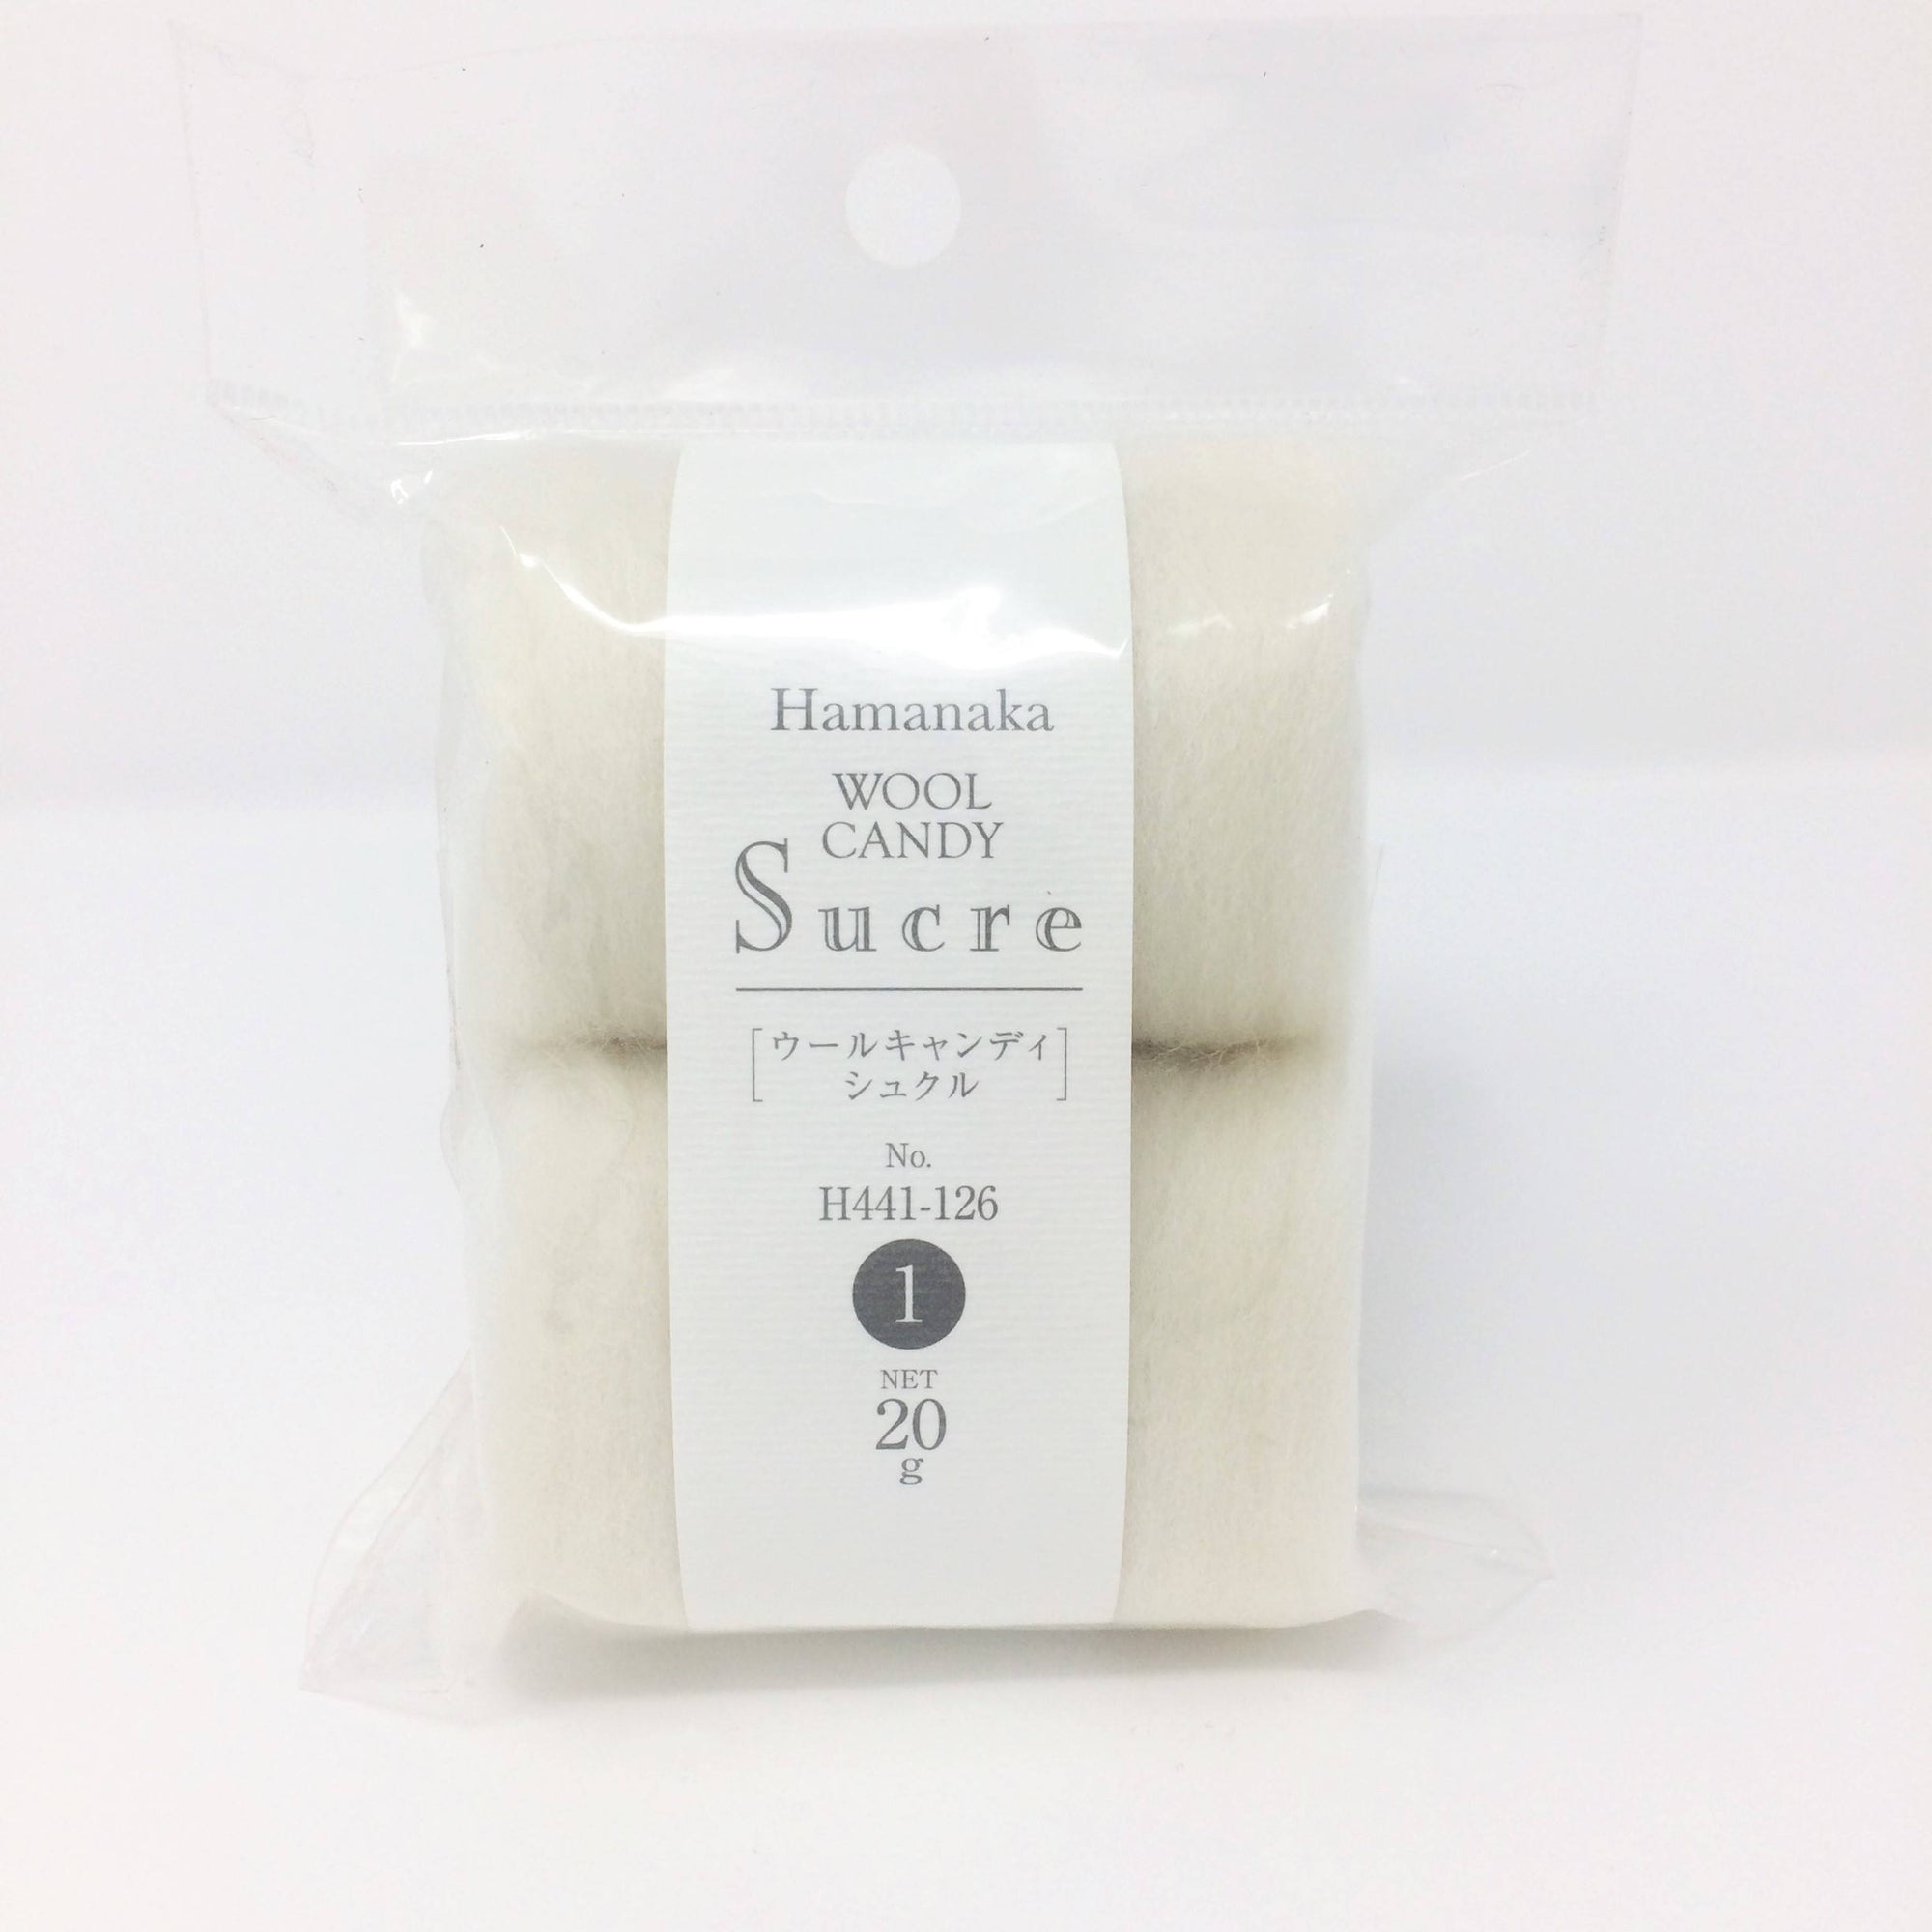 Hamanaka Wool Candy Sucre - White 20g